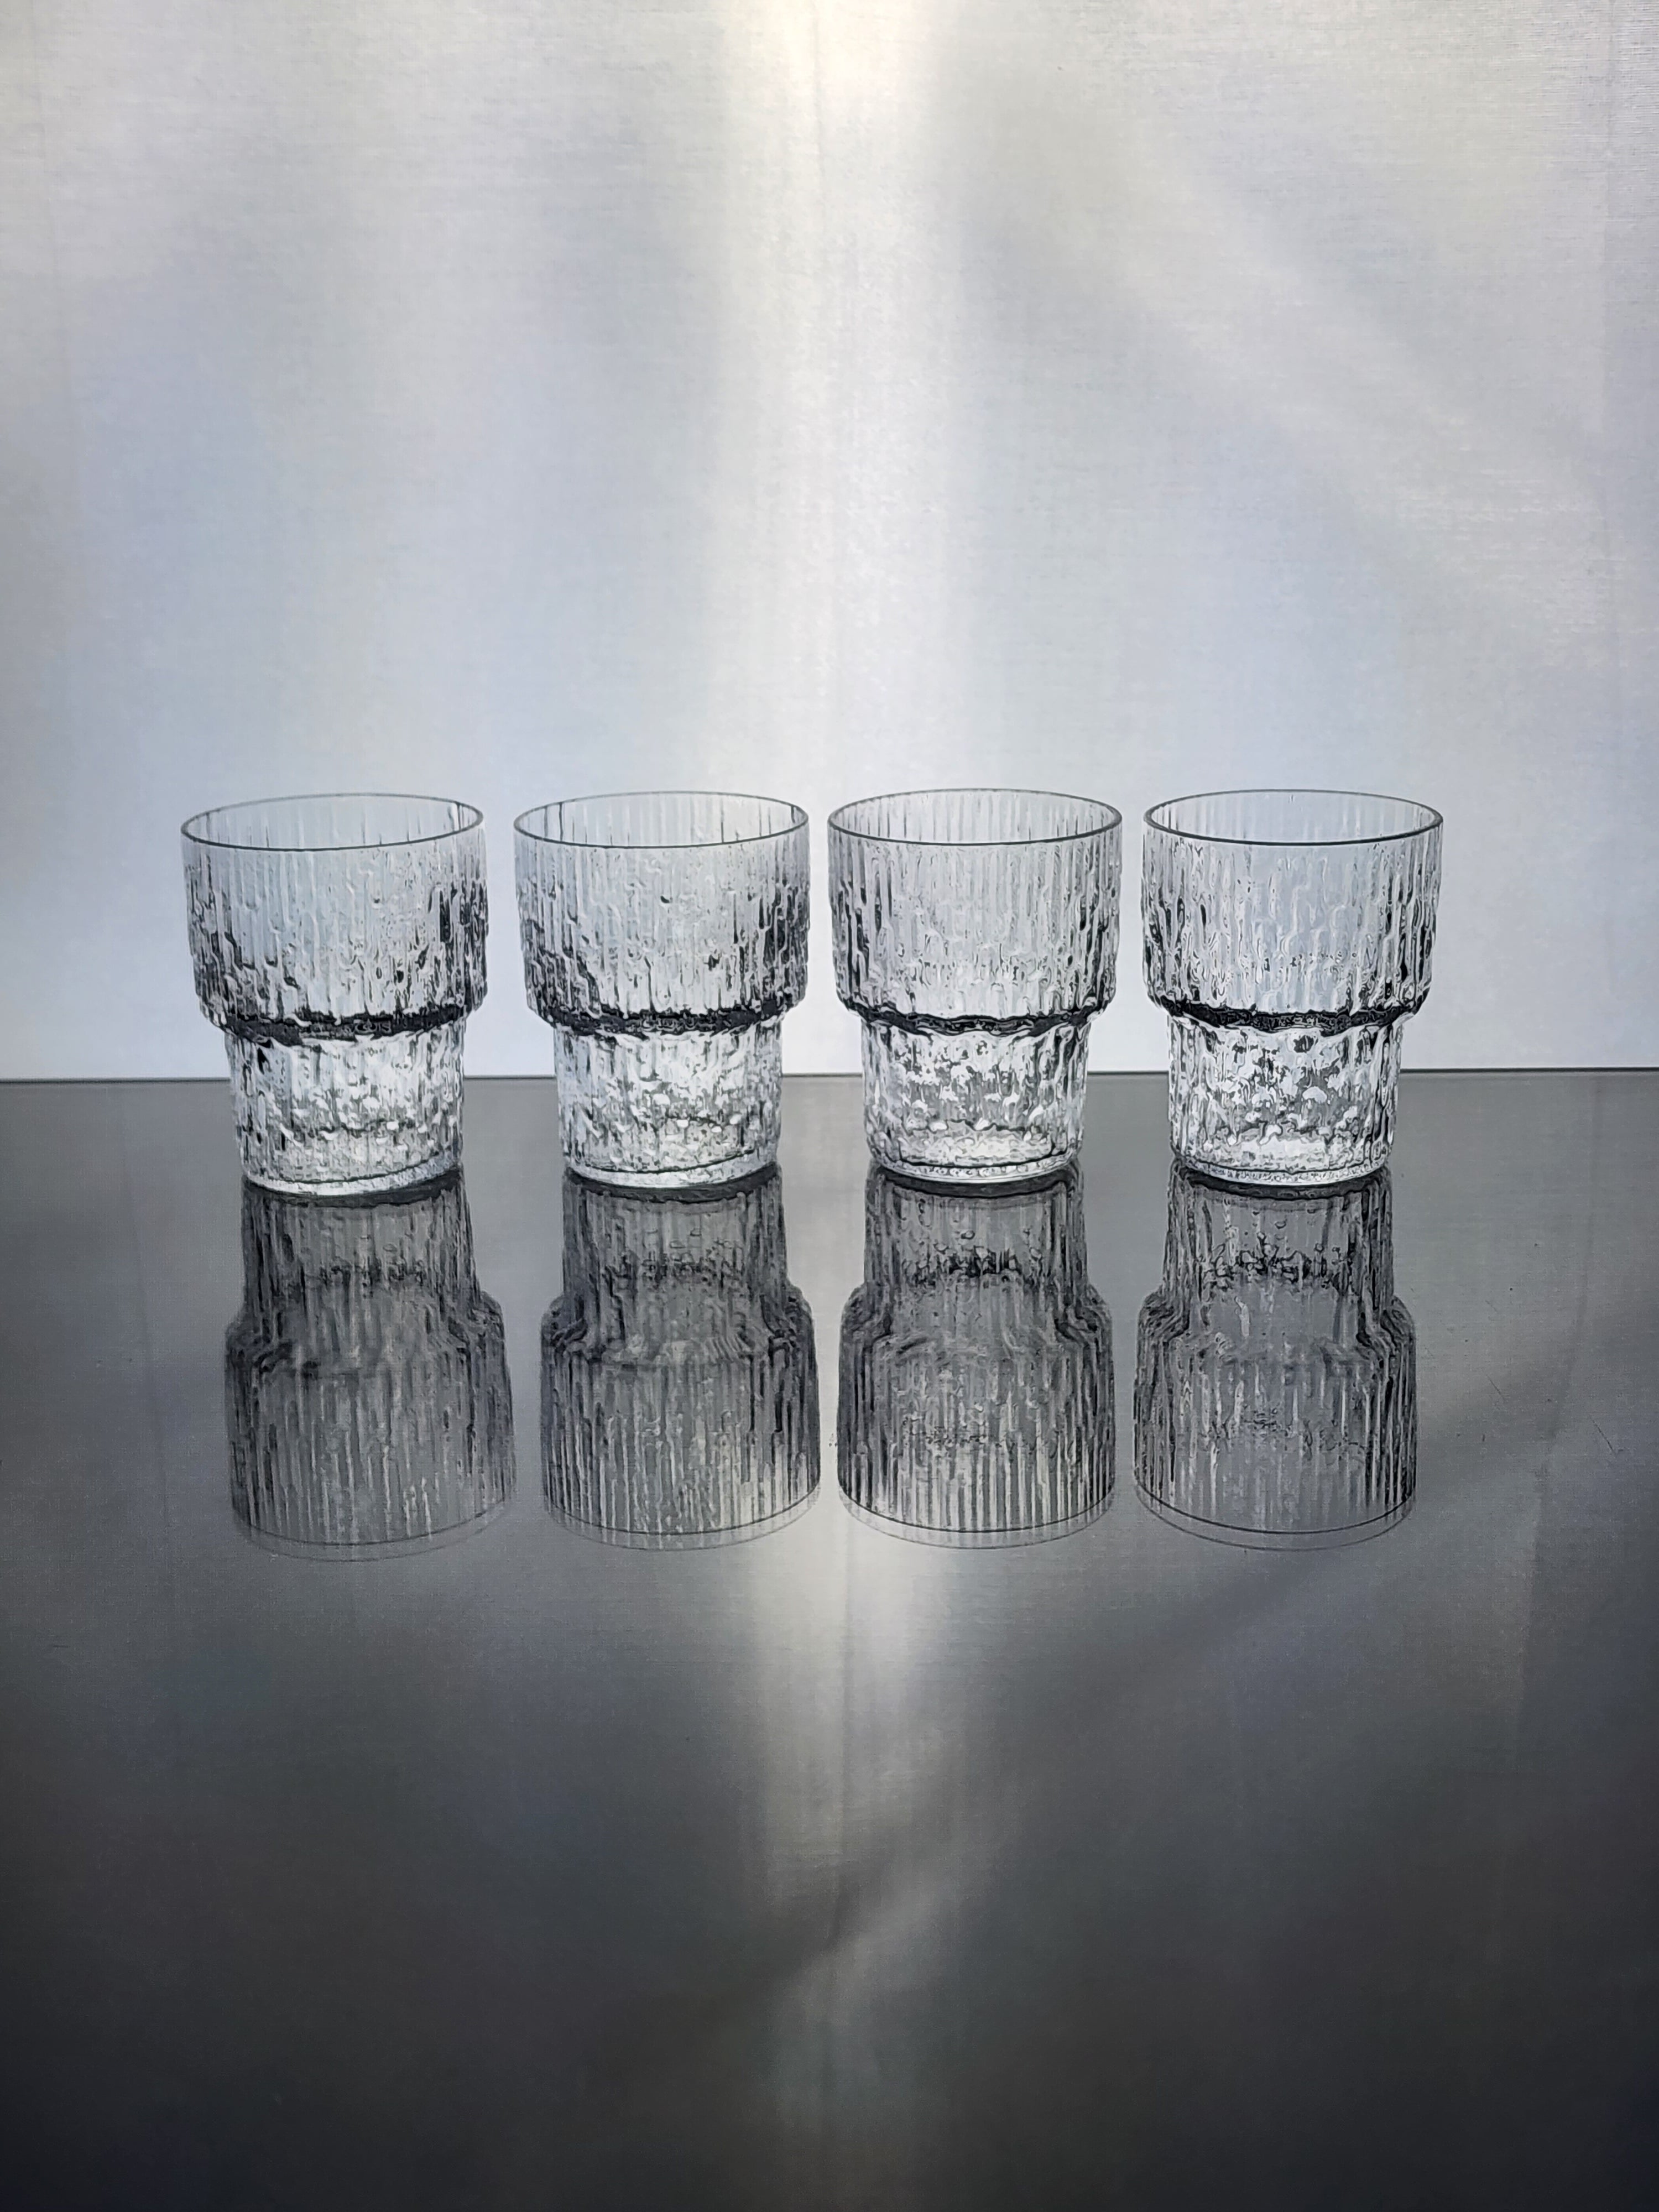 IIttala Paadar Shot Glasses - Set of Four